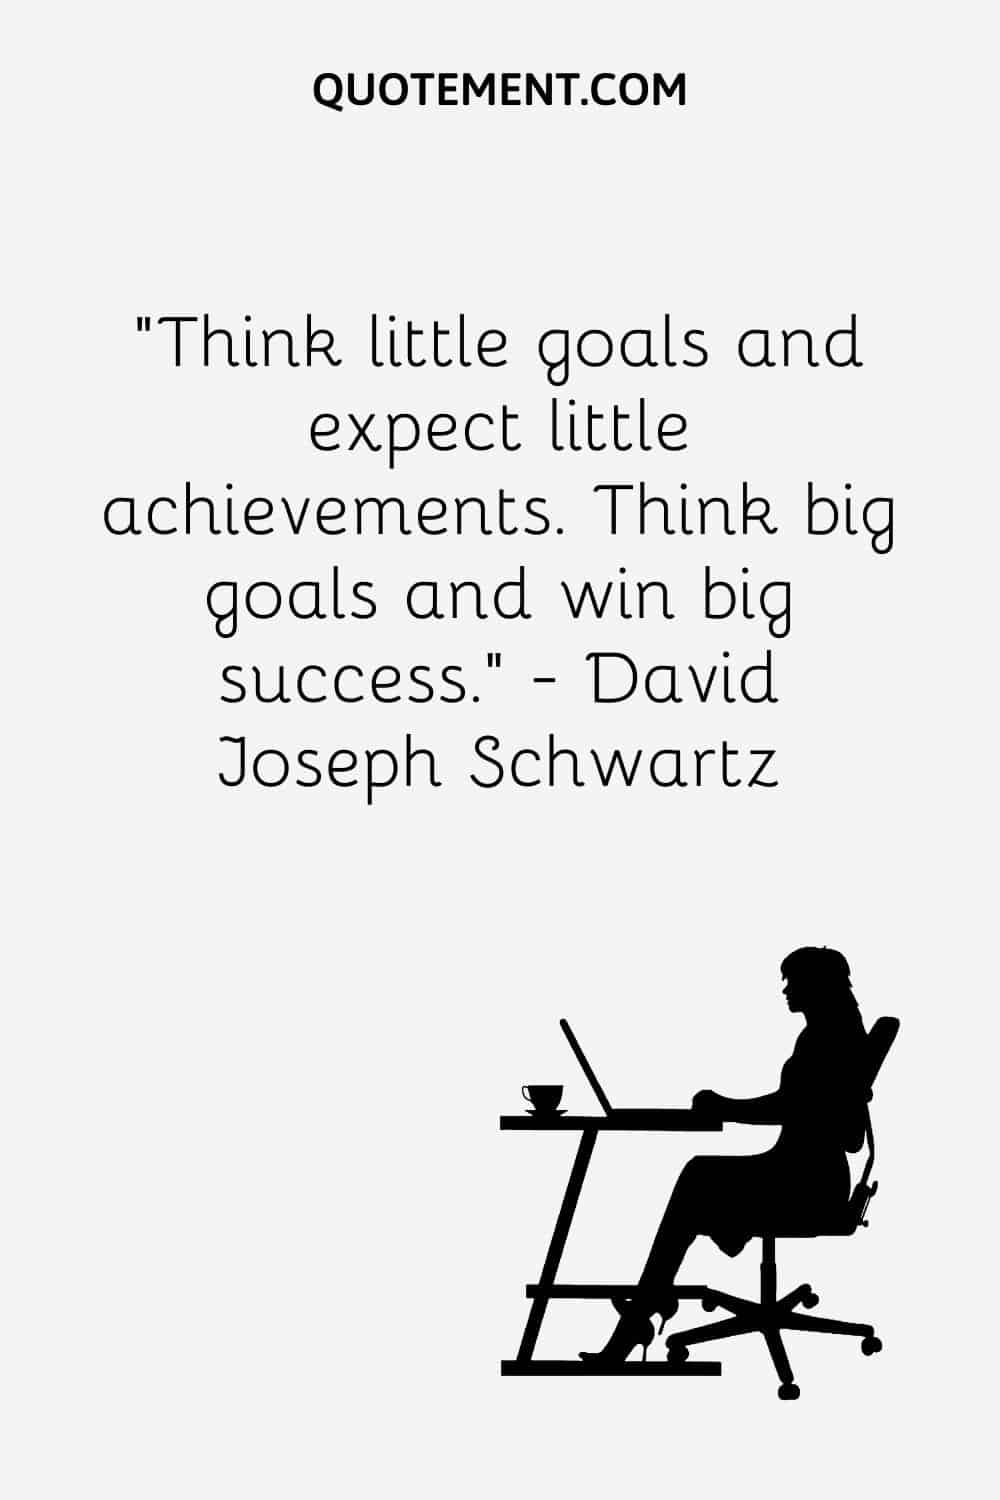 Think little goals and expect little achievements